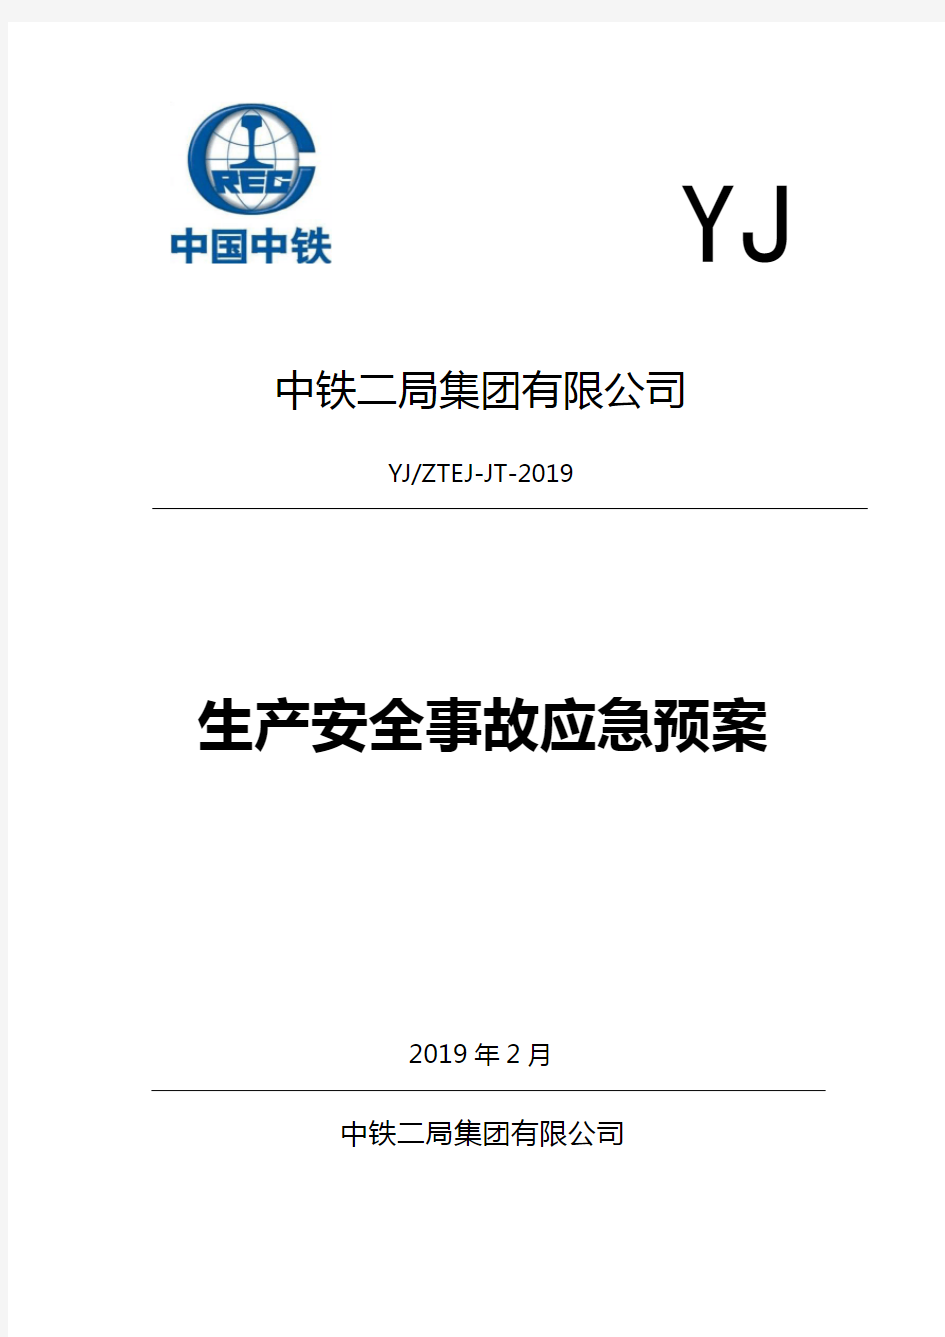 YJ中铁二局集团有限公司YJZTEJ-JT-2019生产安全事故应急预案